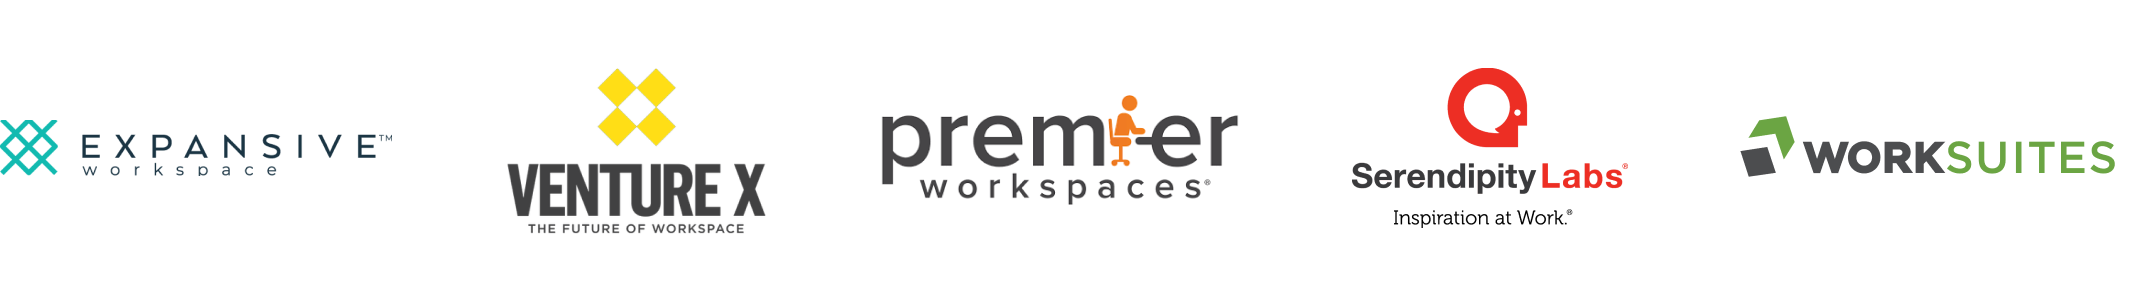 Logos of Expansive Workspaces, VentureX, Premier, Workspaces Serendipity Labs, and Worksuites